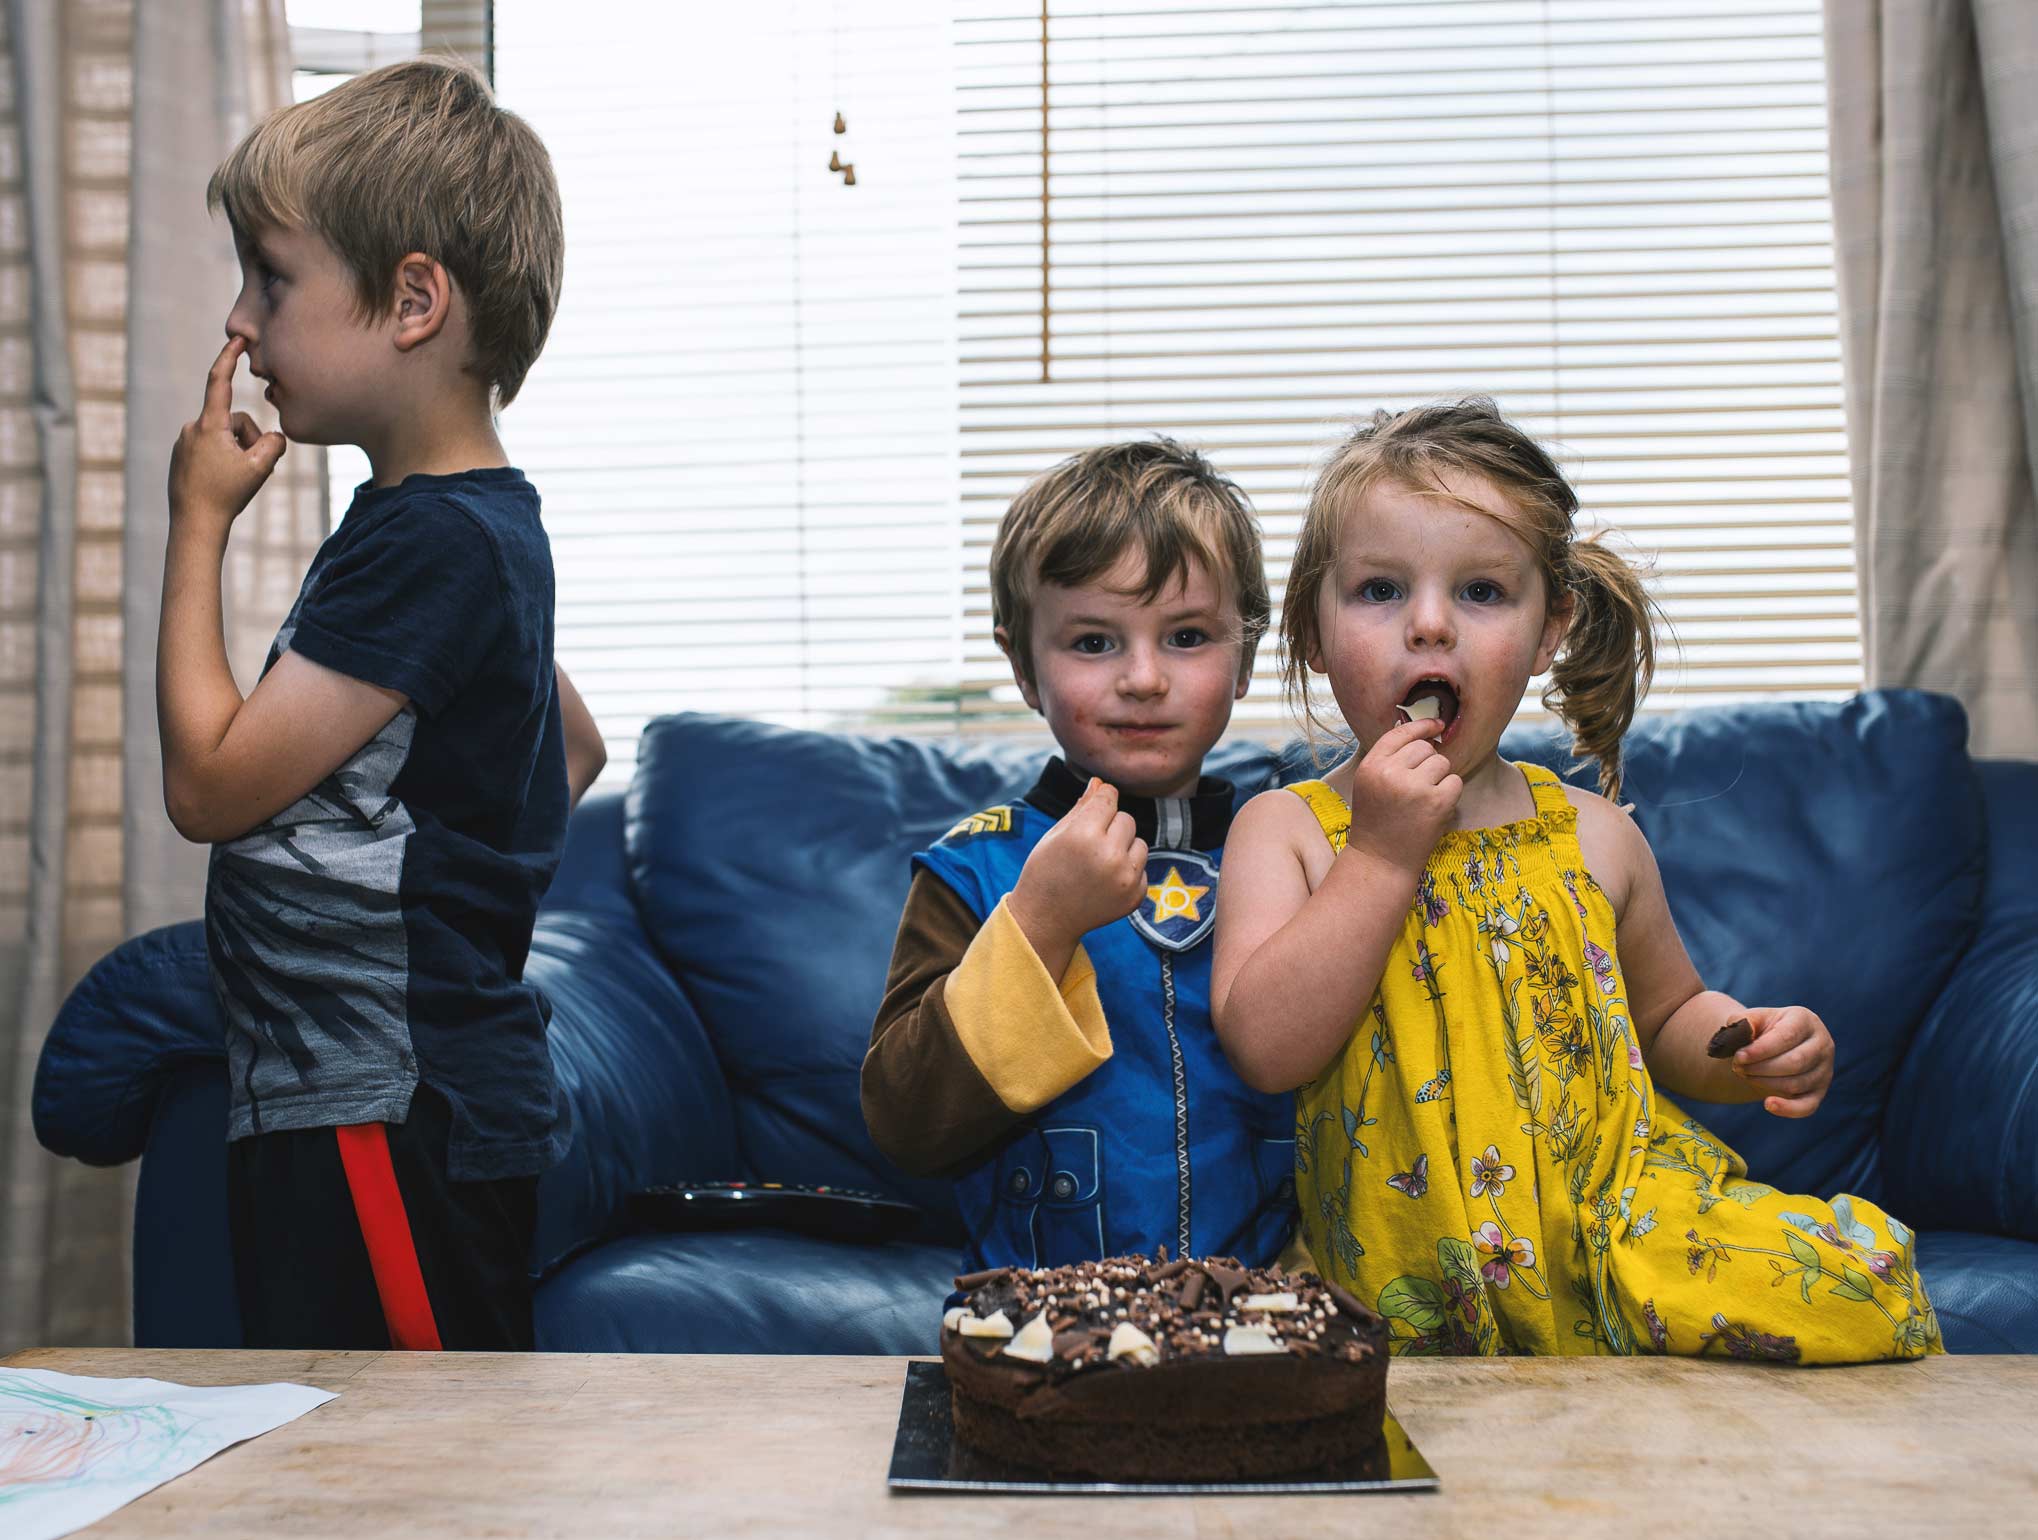 Three children at birthday eating chocolate and picking nose